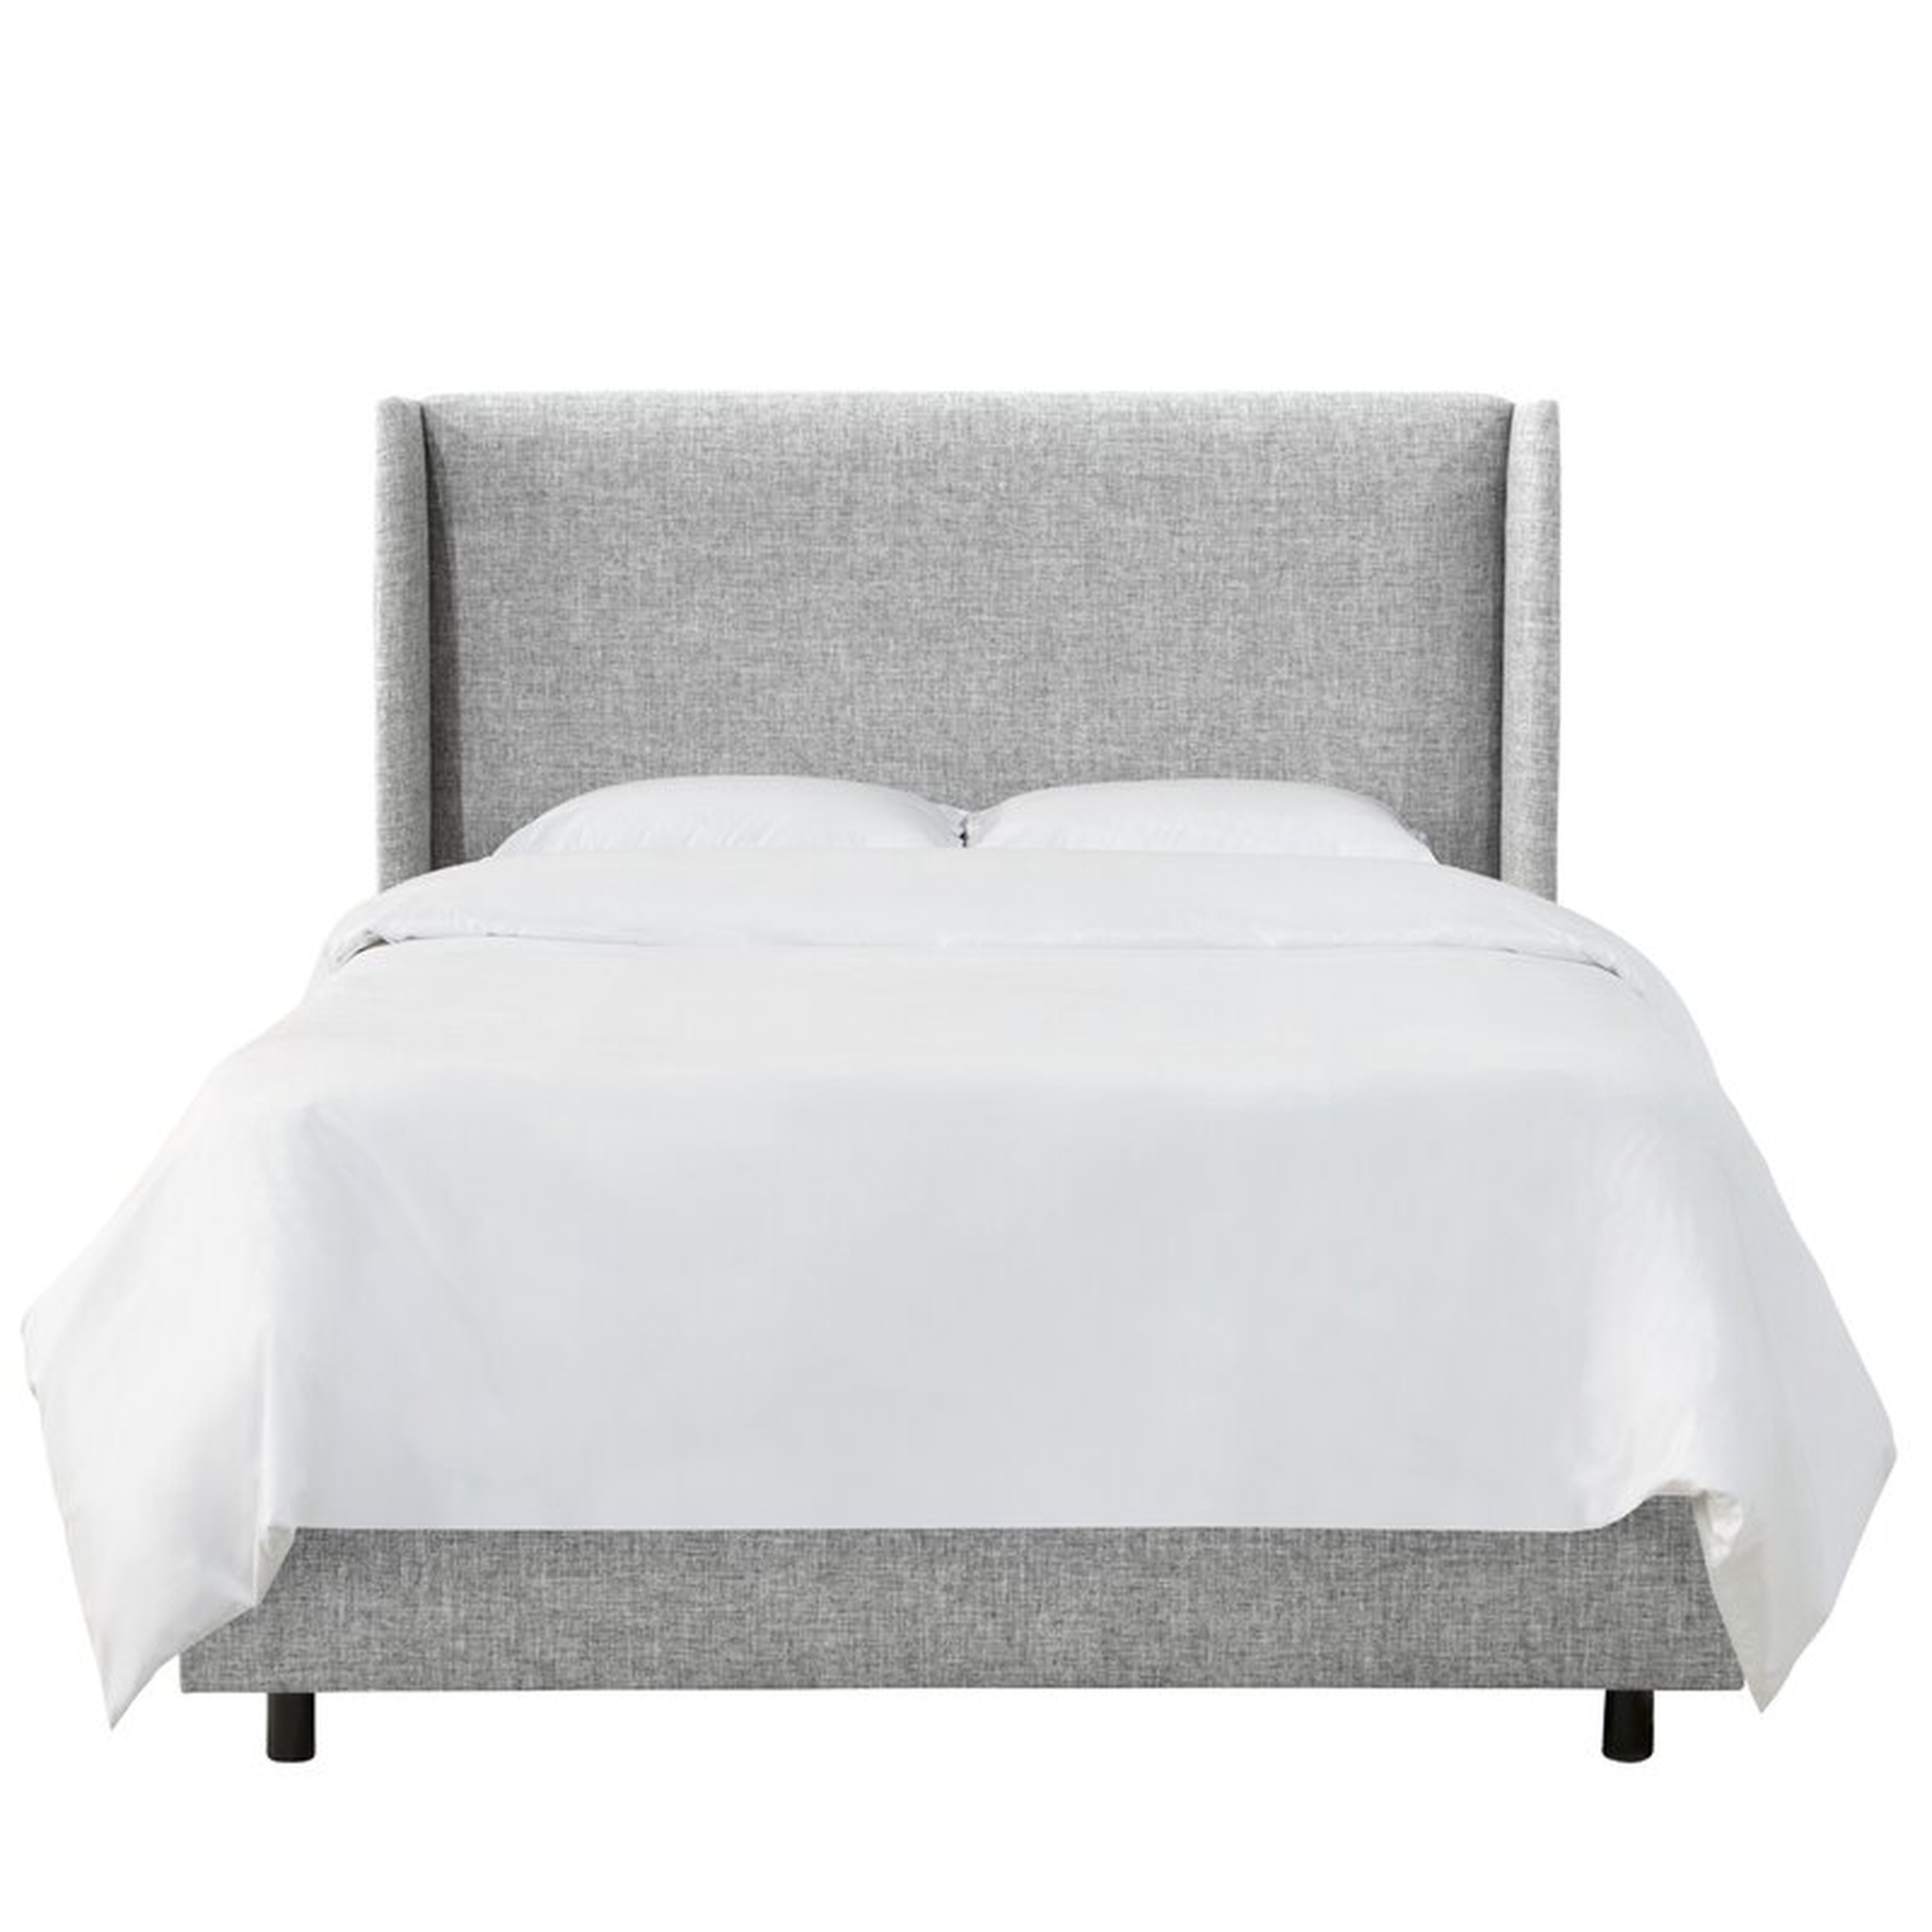 Alrai Upholstered Low Profile Standard Bed / Queen / Zuma Pumice - Wayfair